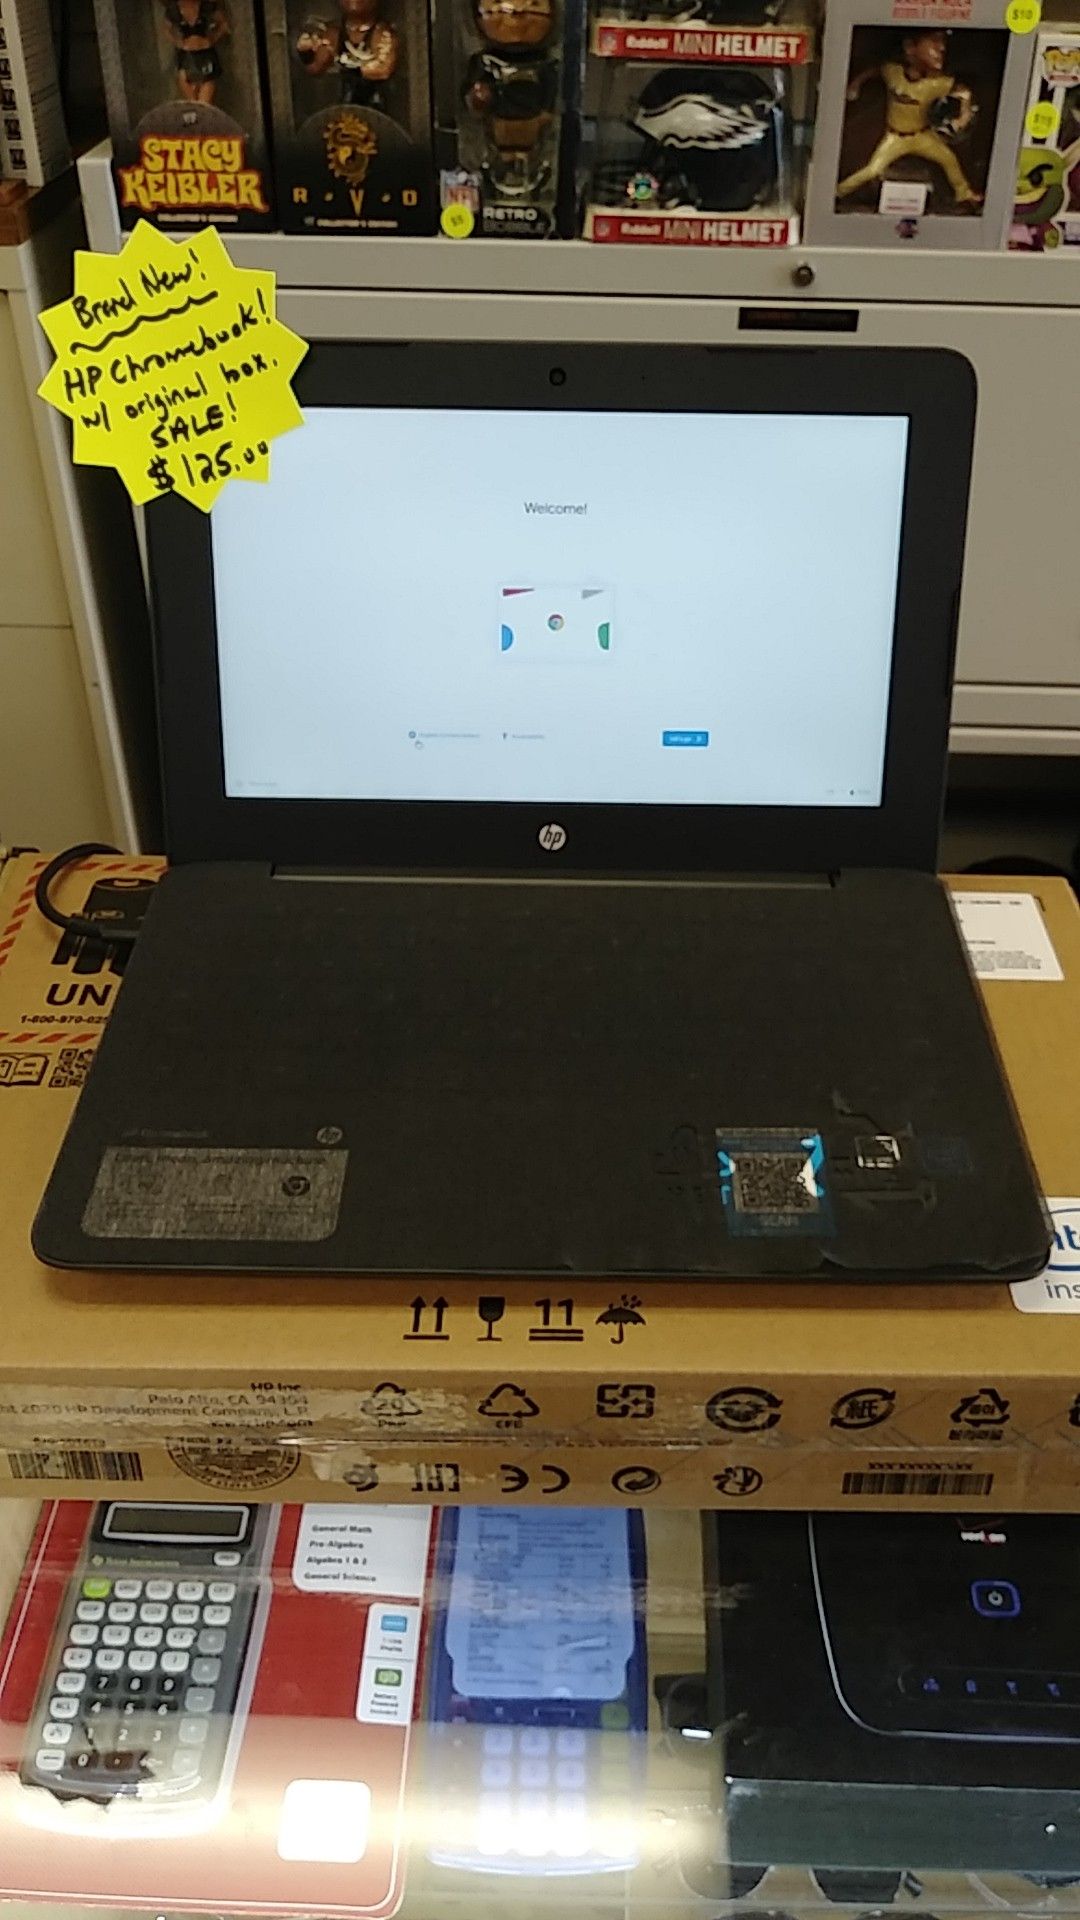 Brand New 2020 HP Google Chromebook w/ Original Box